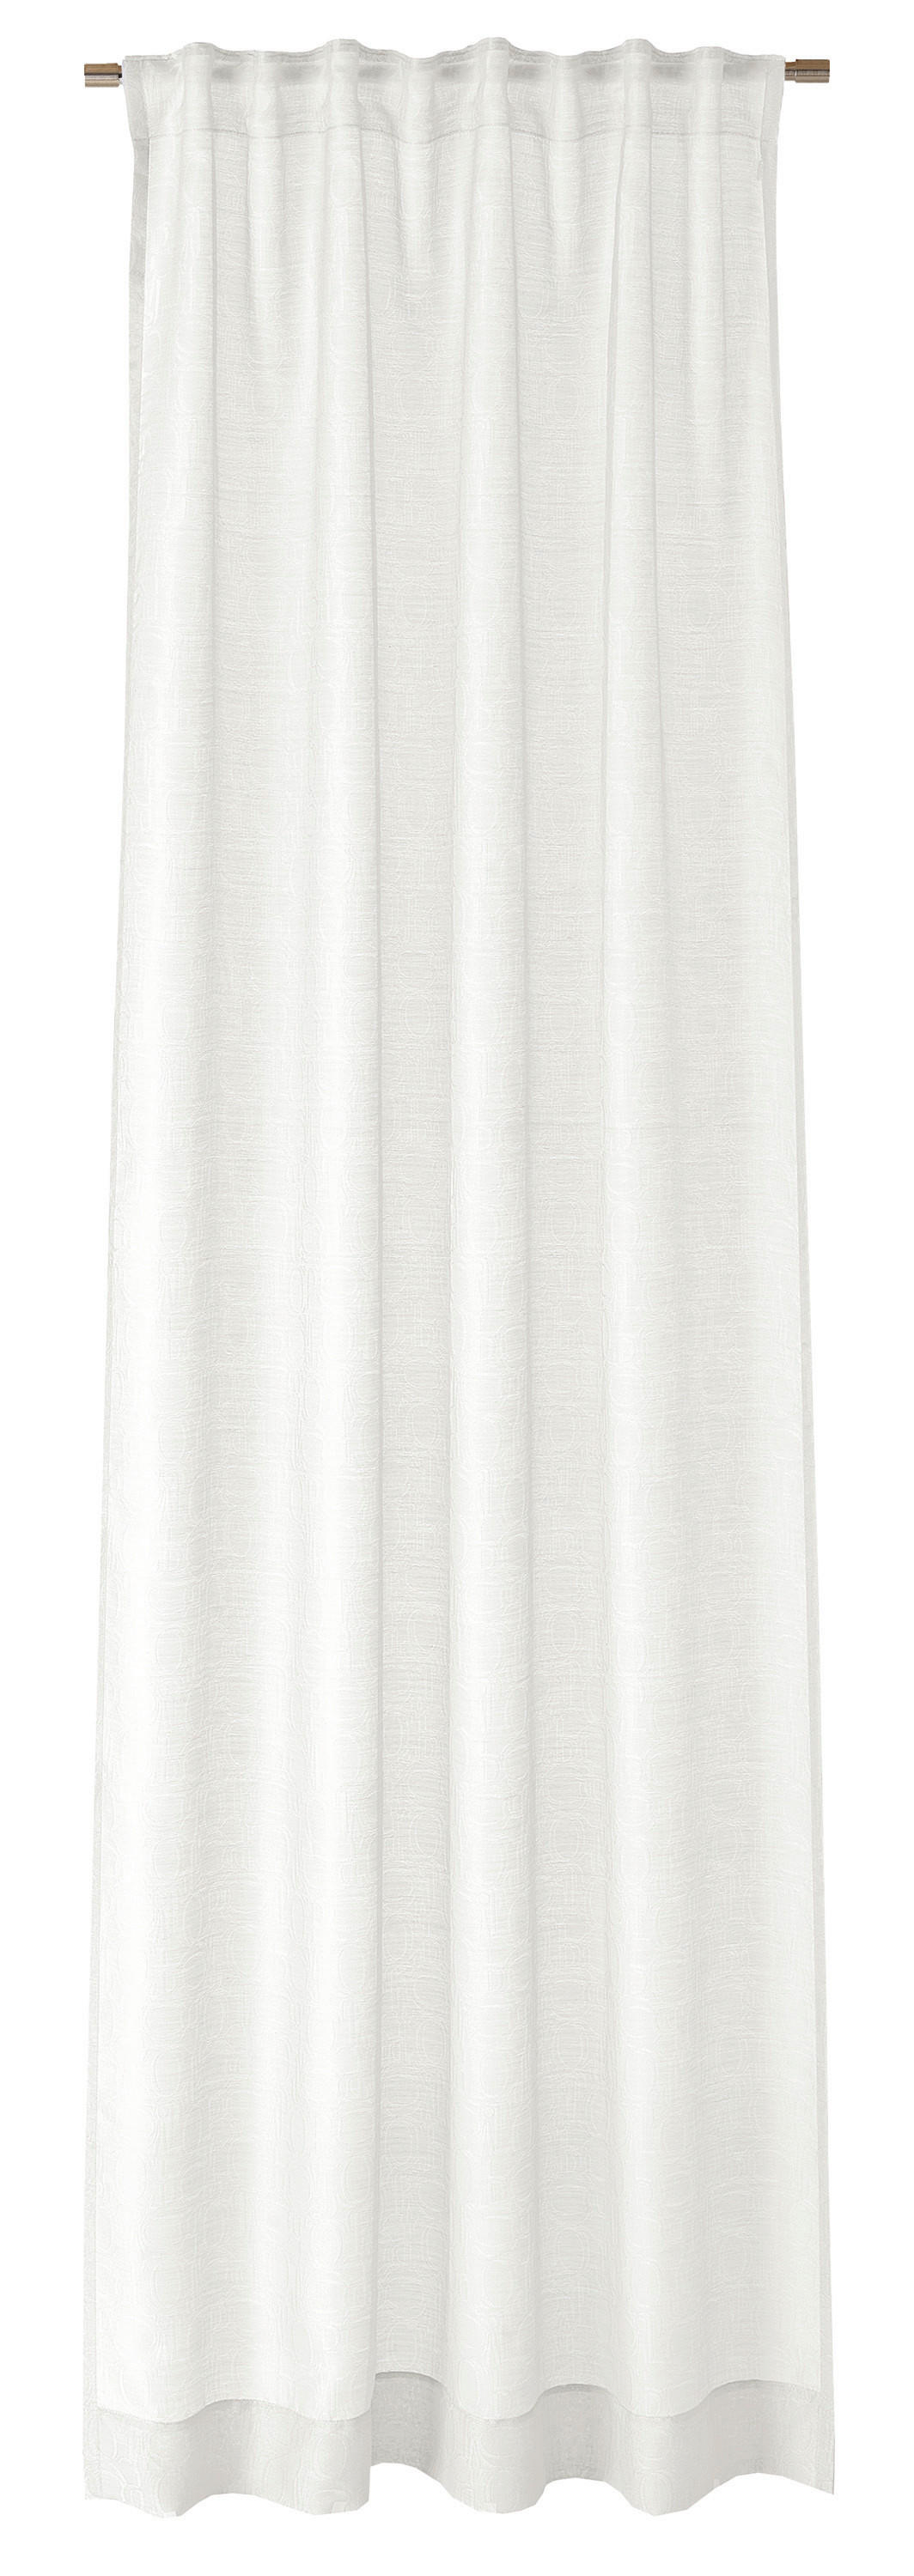 FERTIGVORHANG Ornament Allover transparent 130/250 cm   - Weiß, Basics, Textil (130/250cm) - Joop!